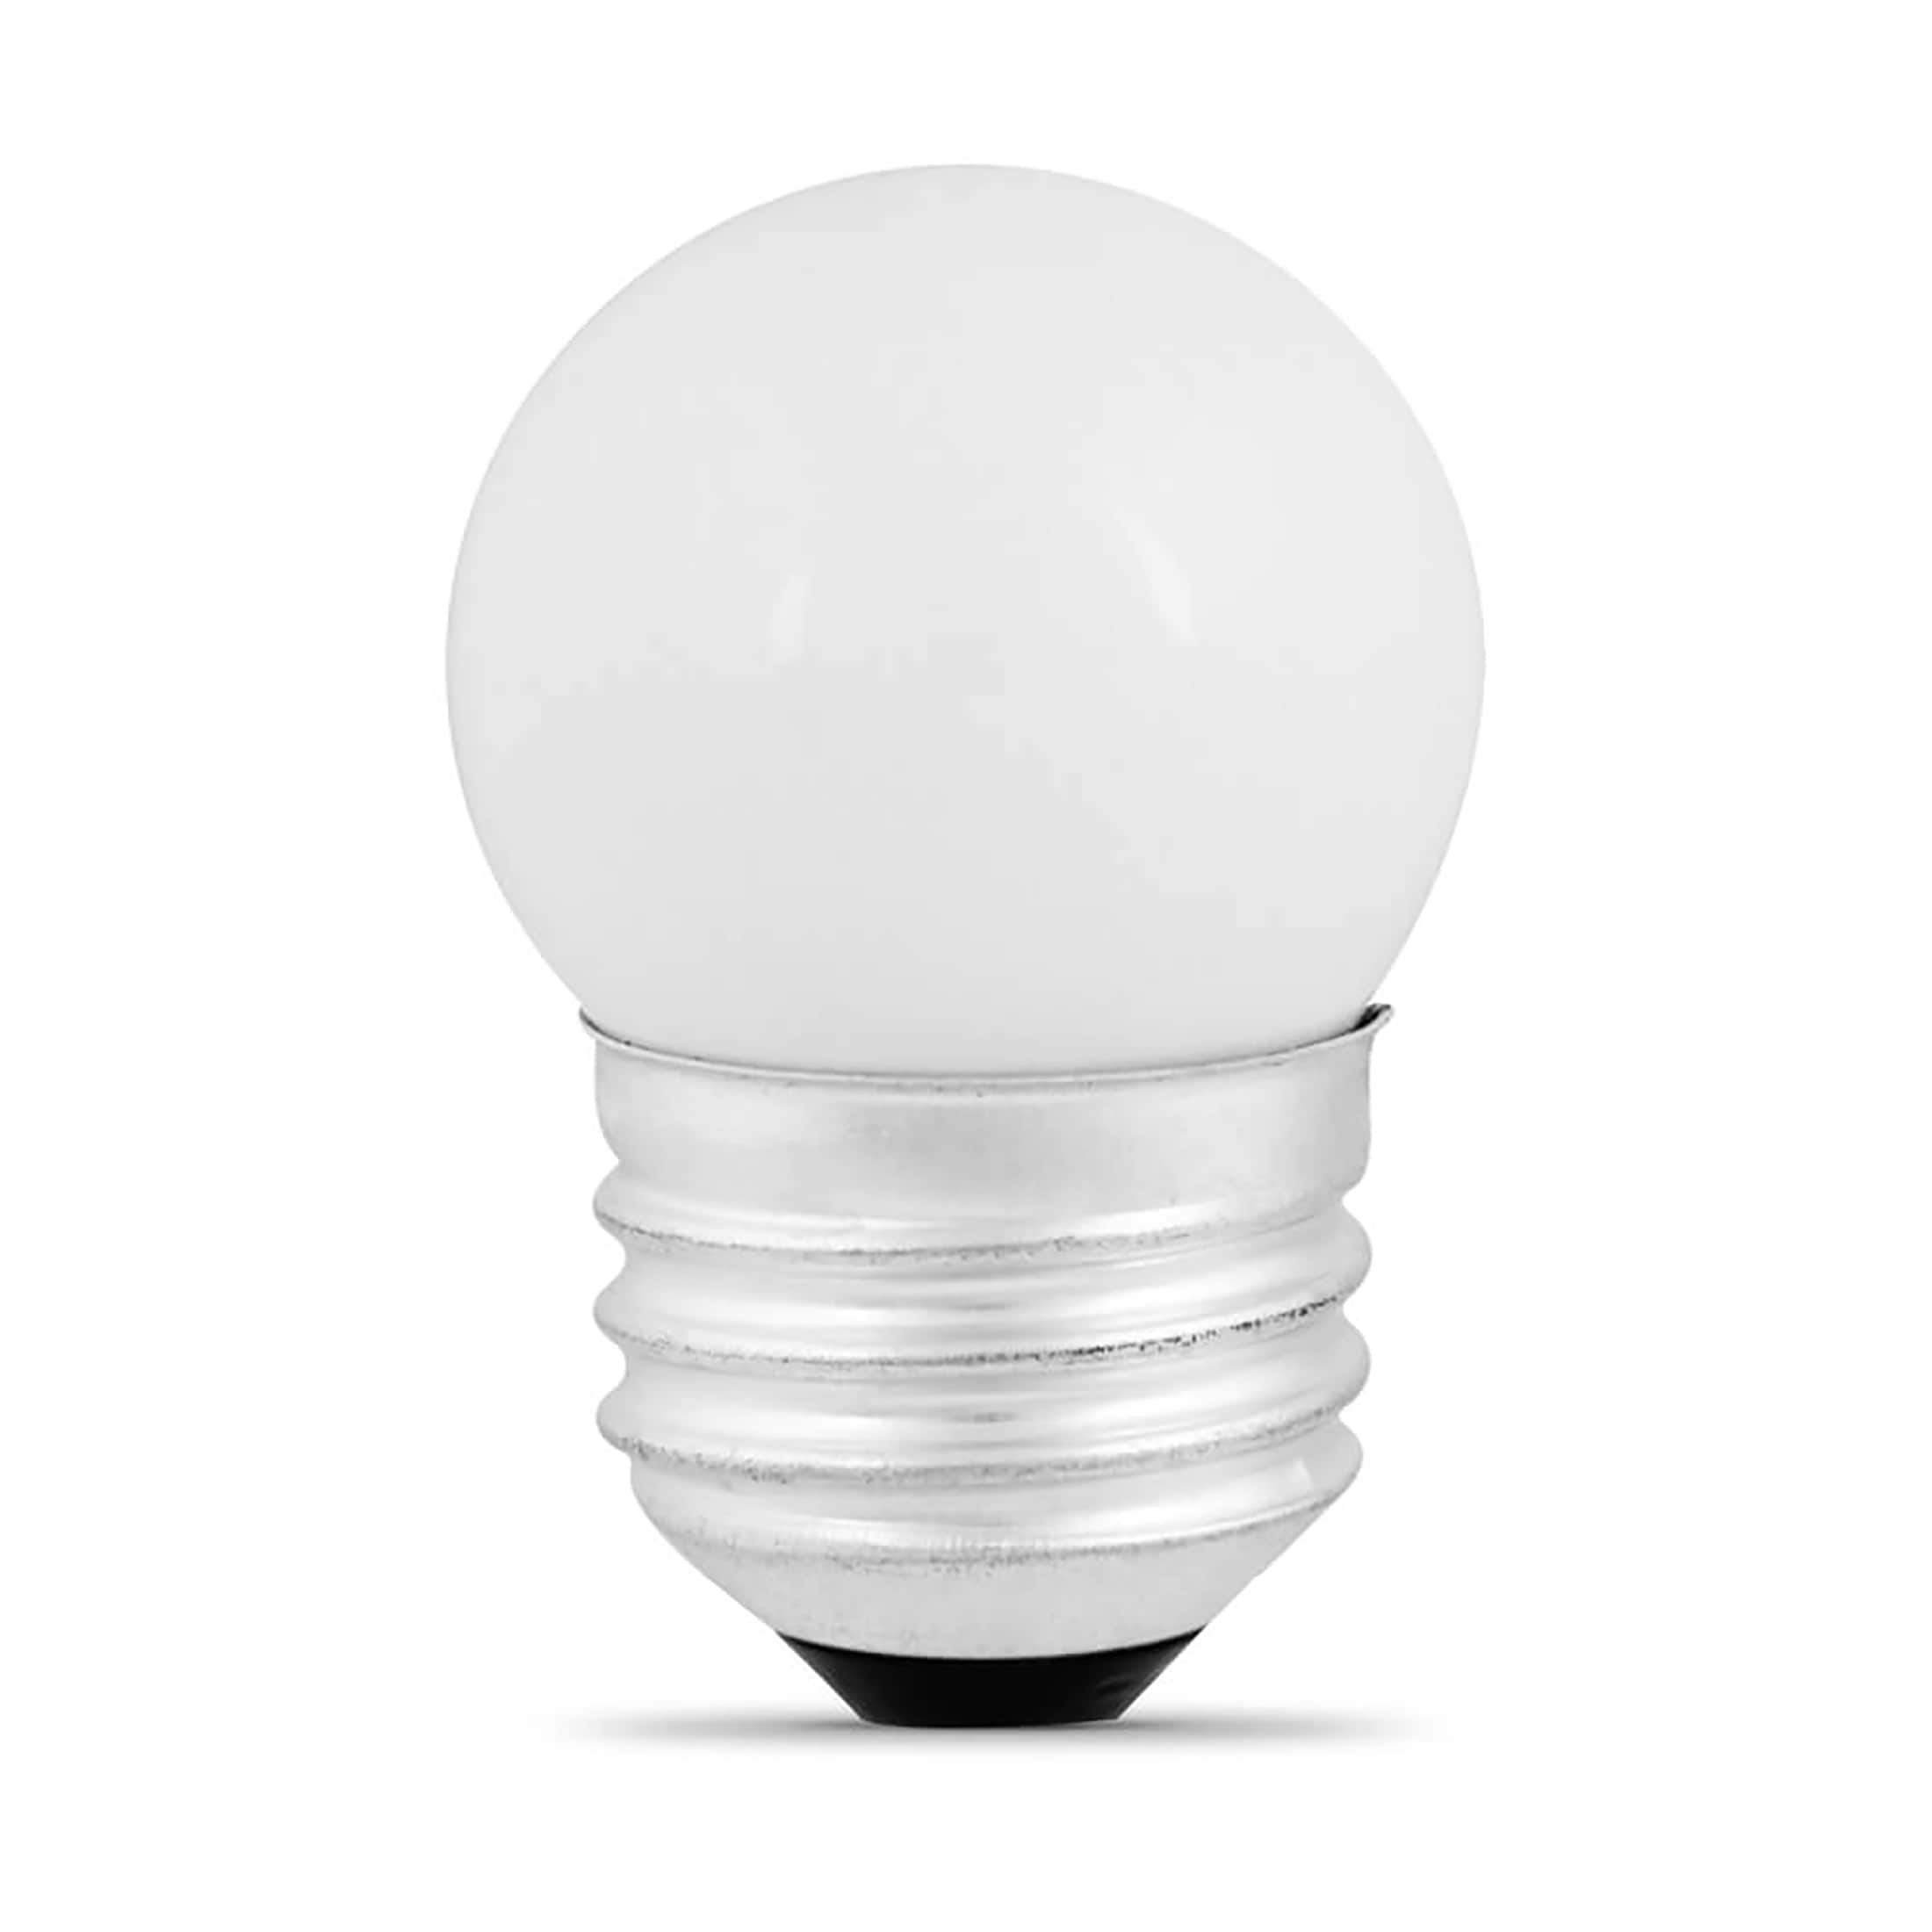 Feit Electric White LED Night Light Auto On/Off | BATH1/LED